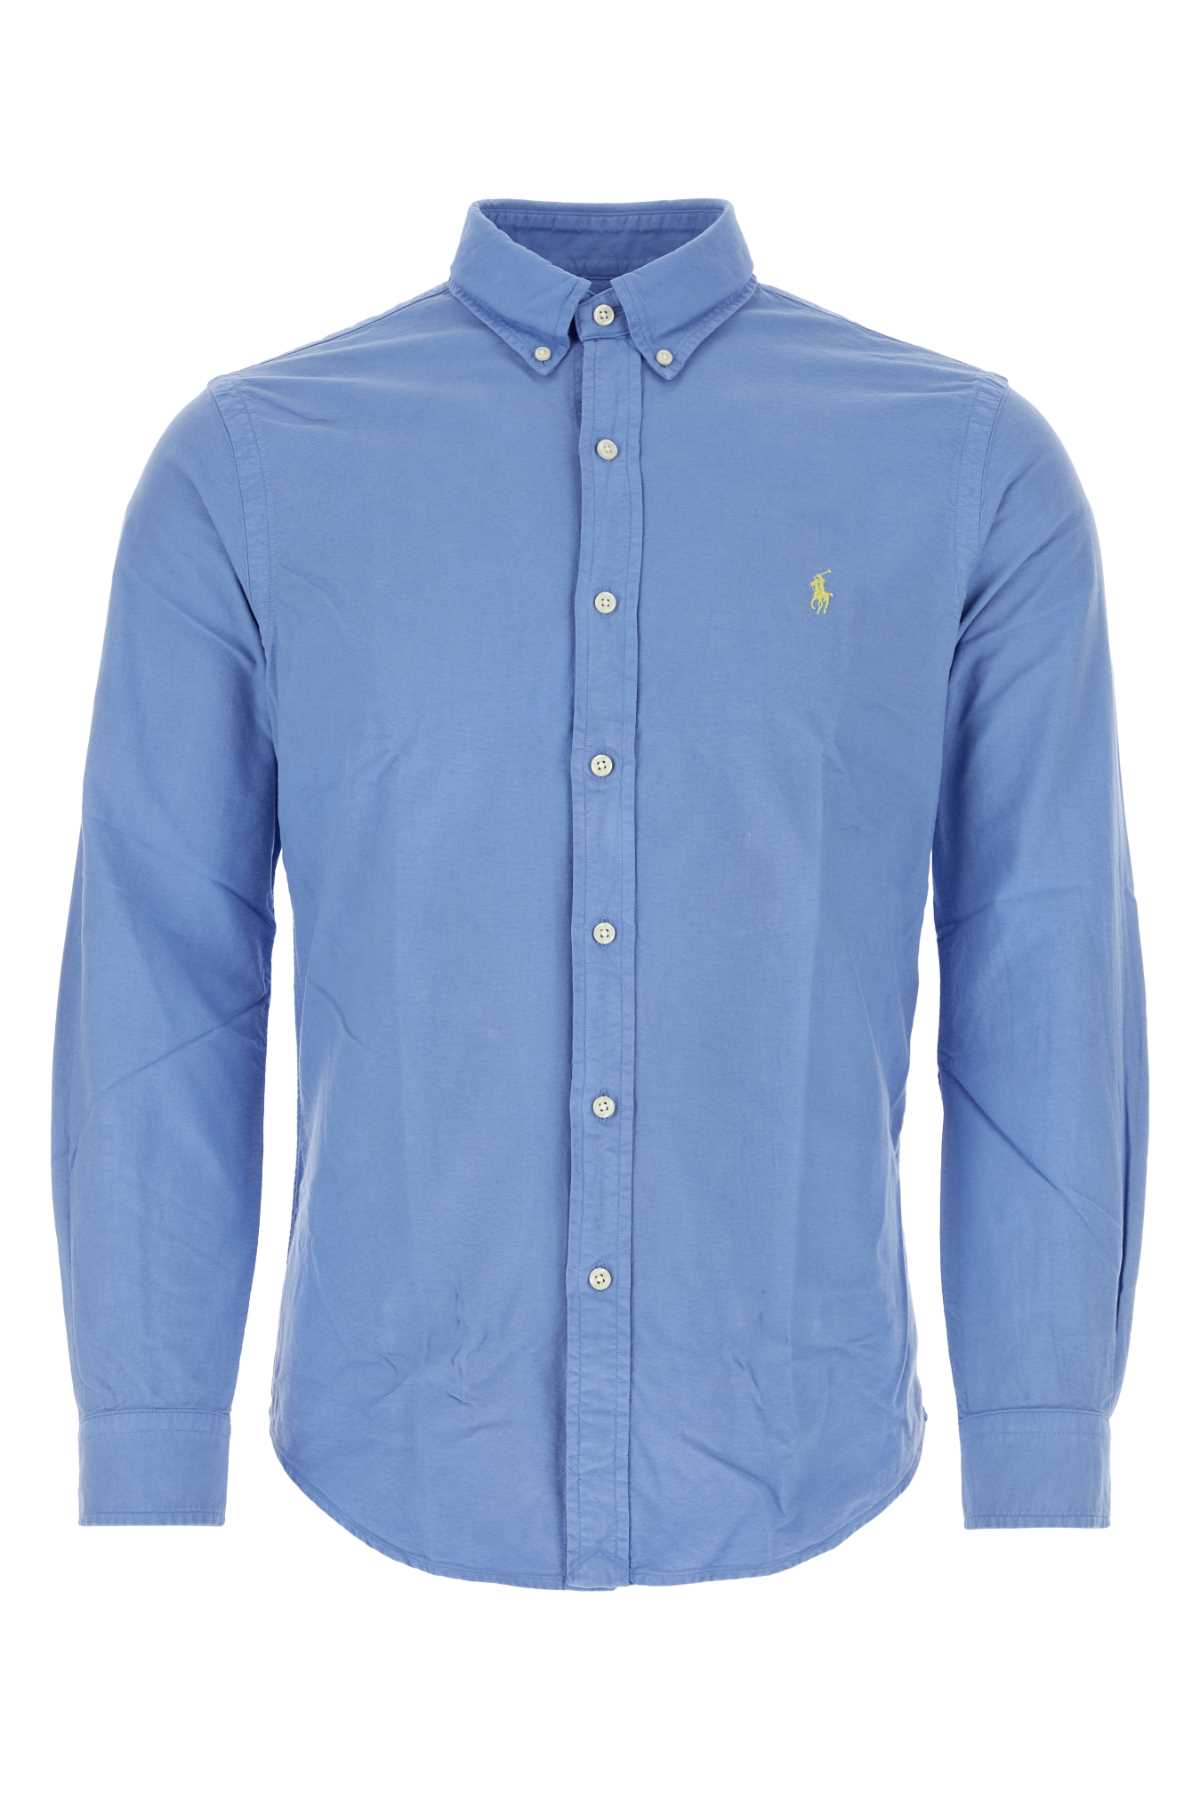 Cerulean Blue Oxford Shirt